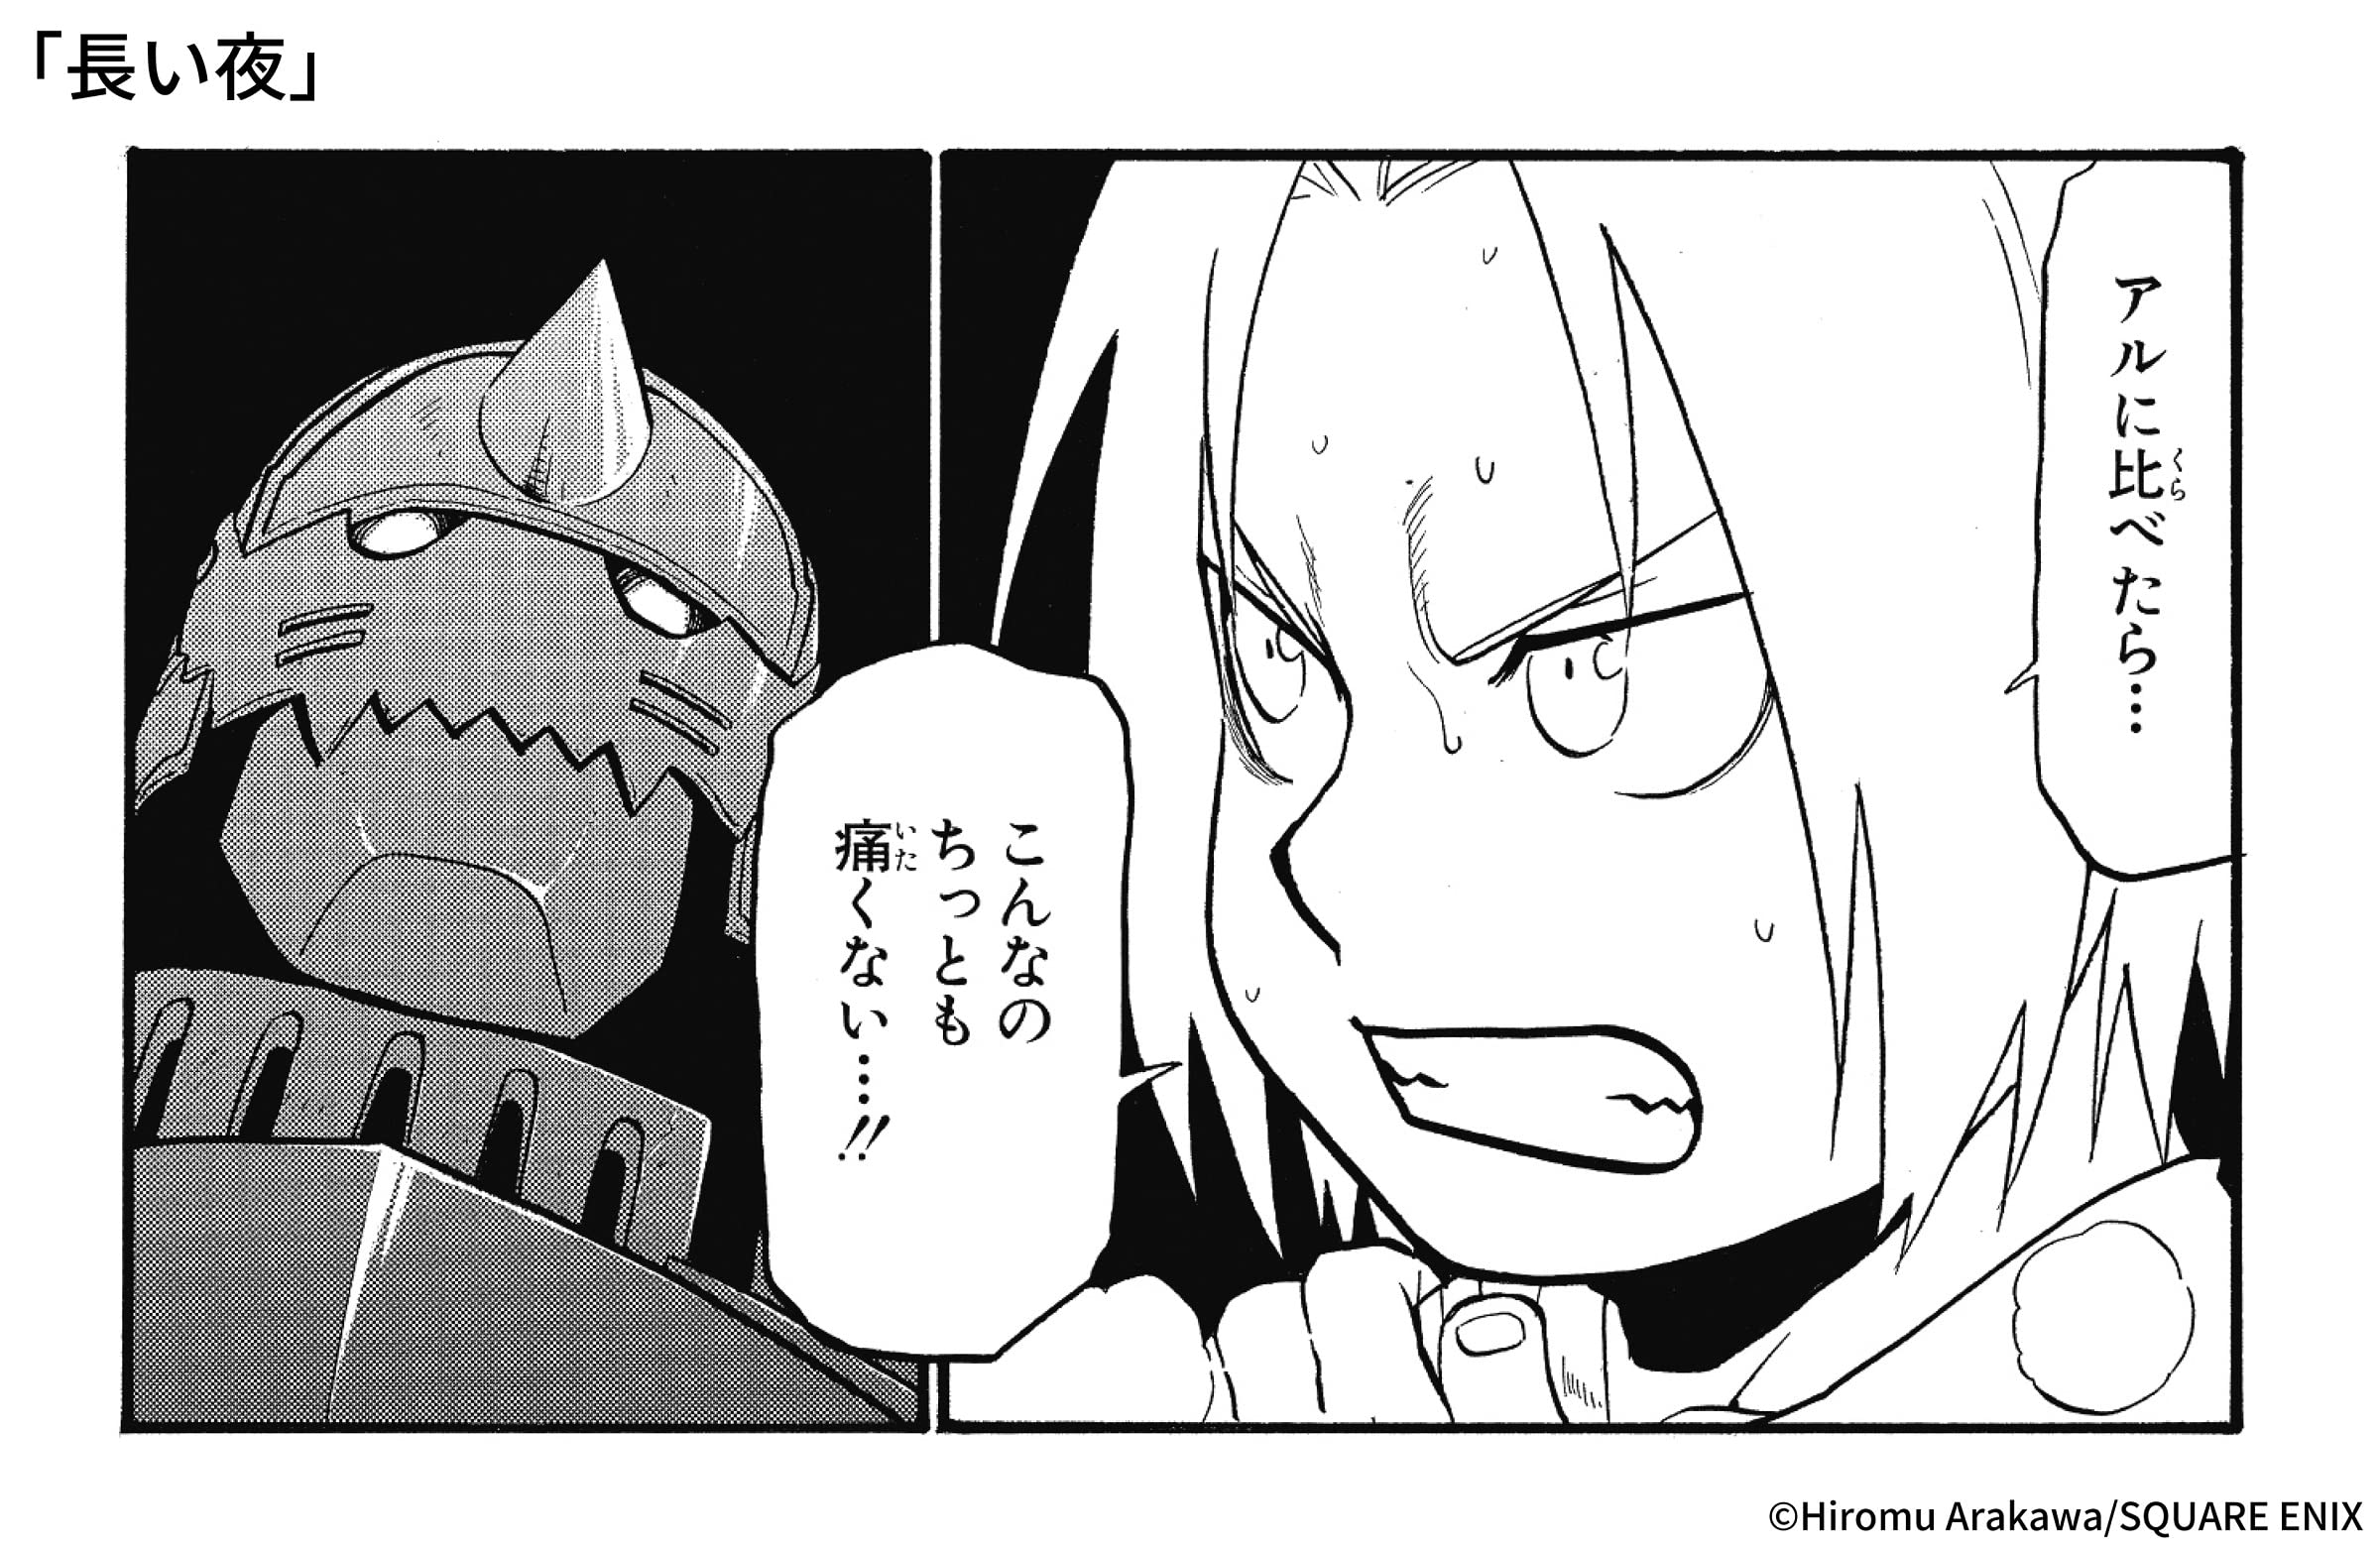 Fullmetal Alchemist Manga Panel Edward Elric | Postcard